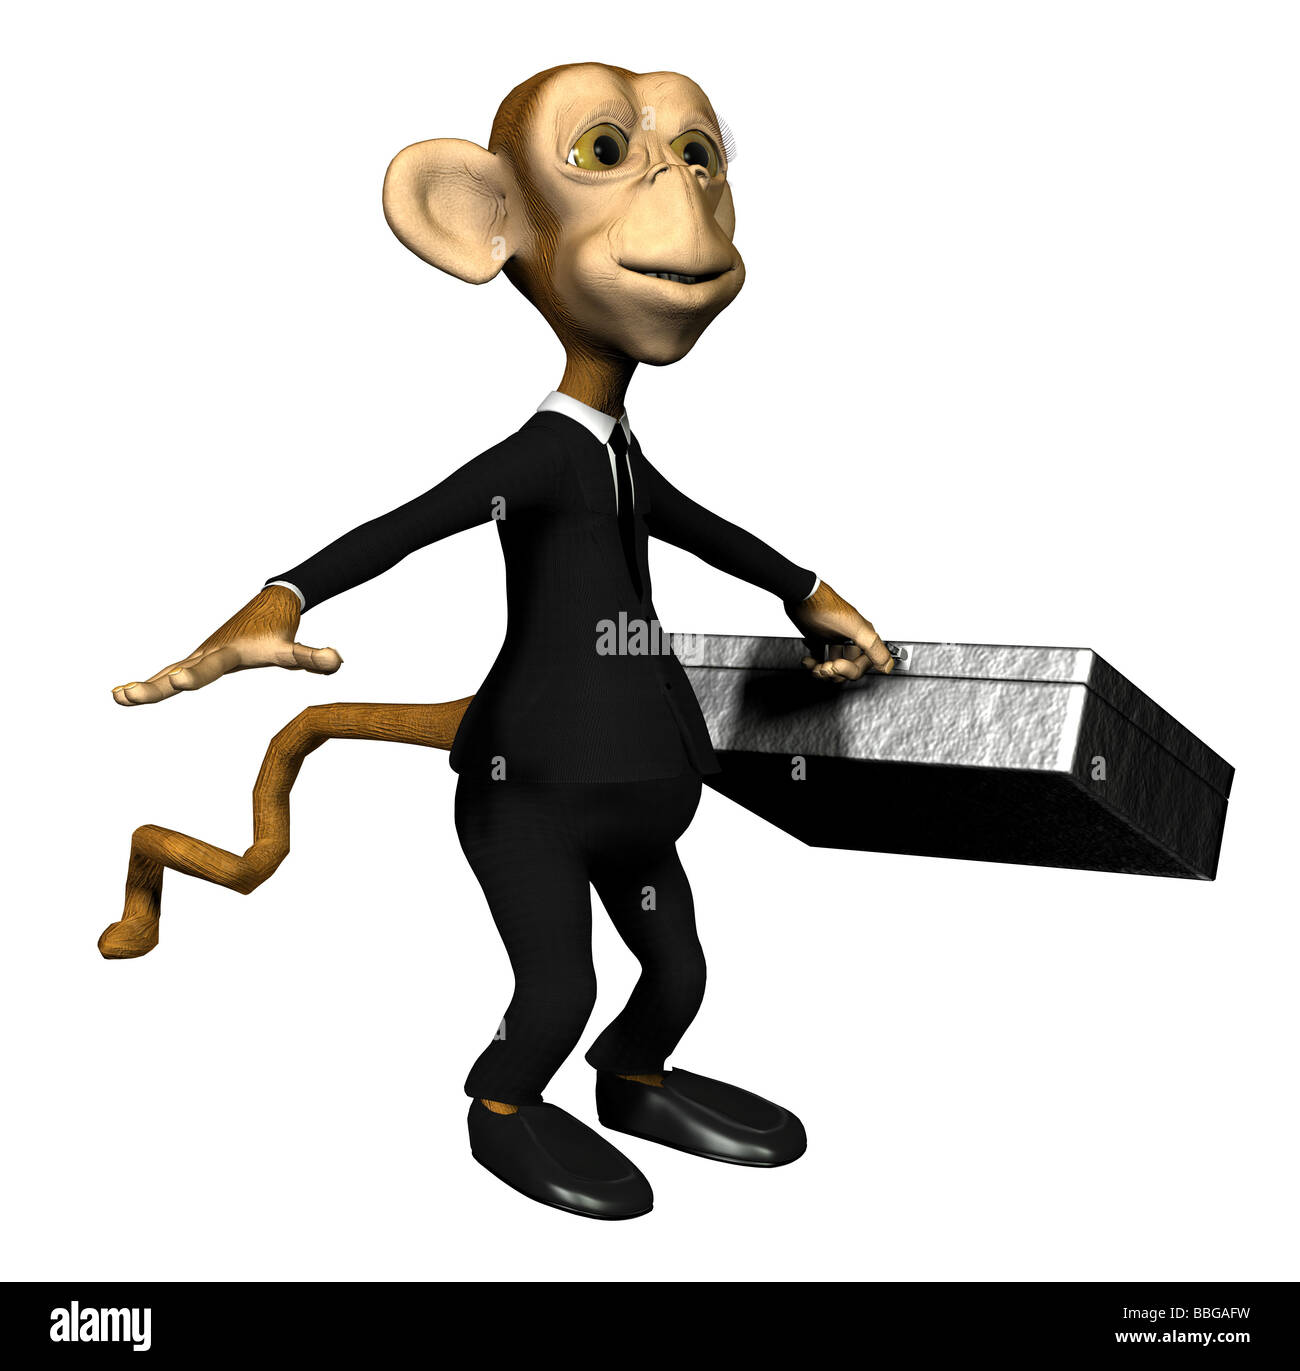 monkey with suit Stock Photo